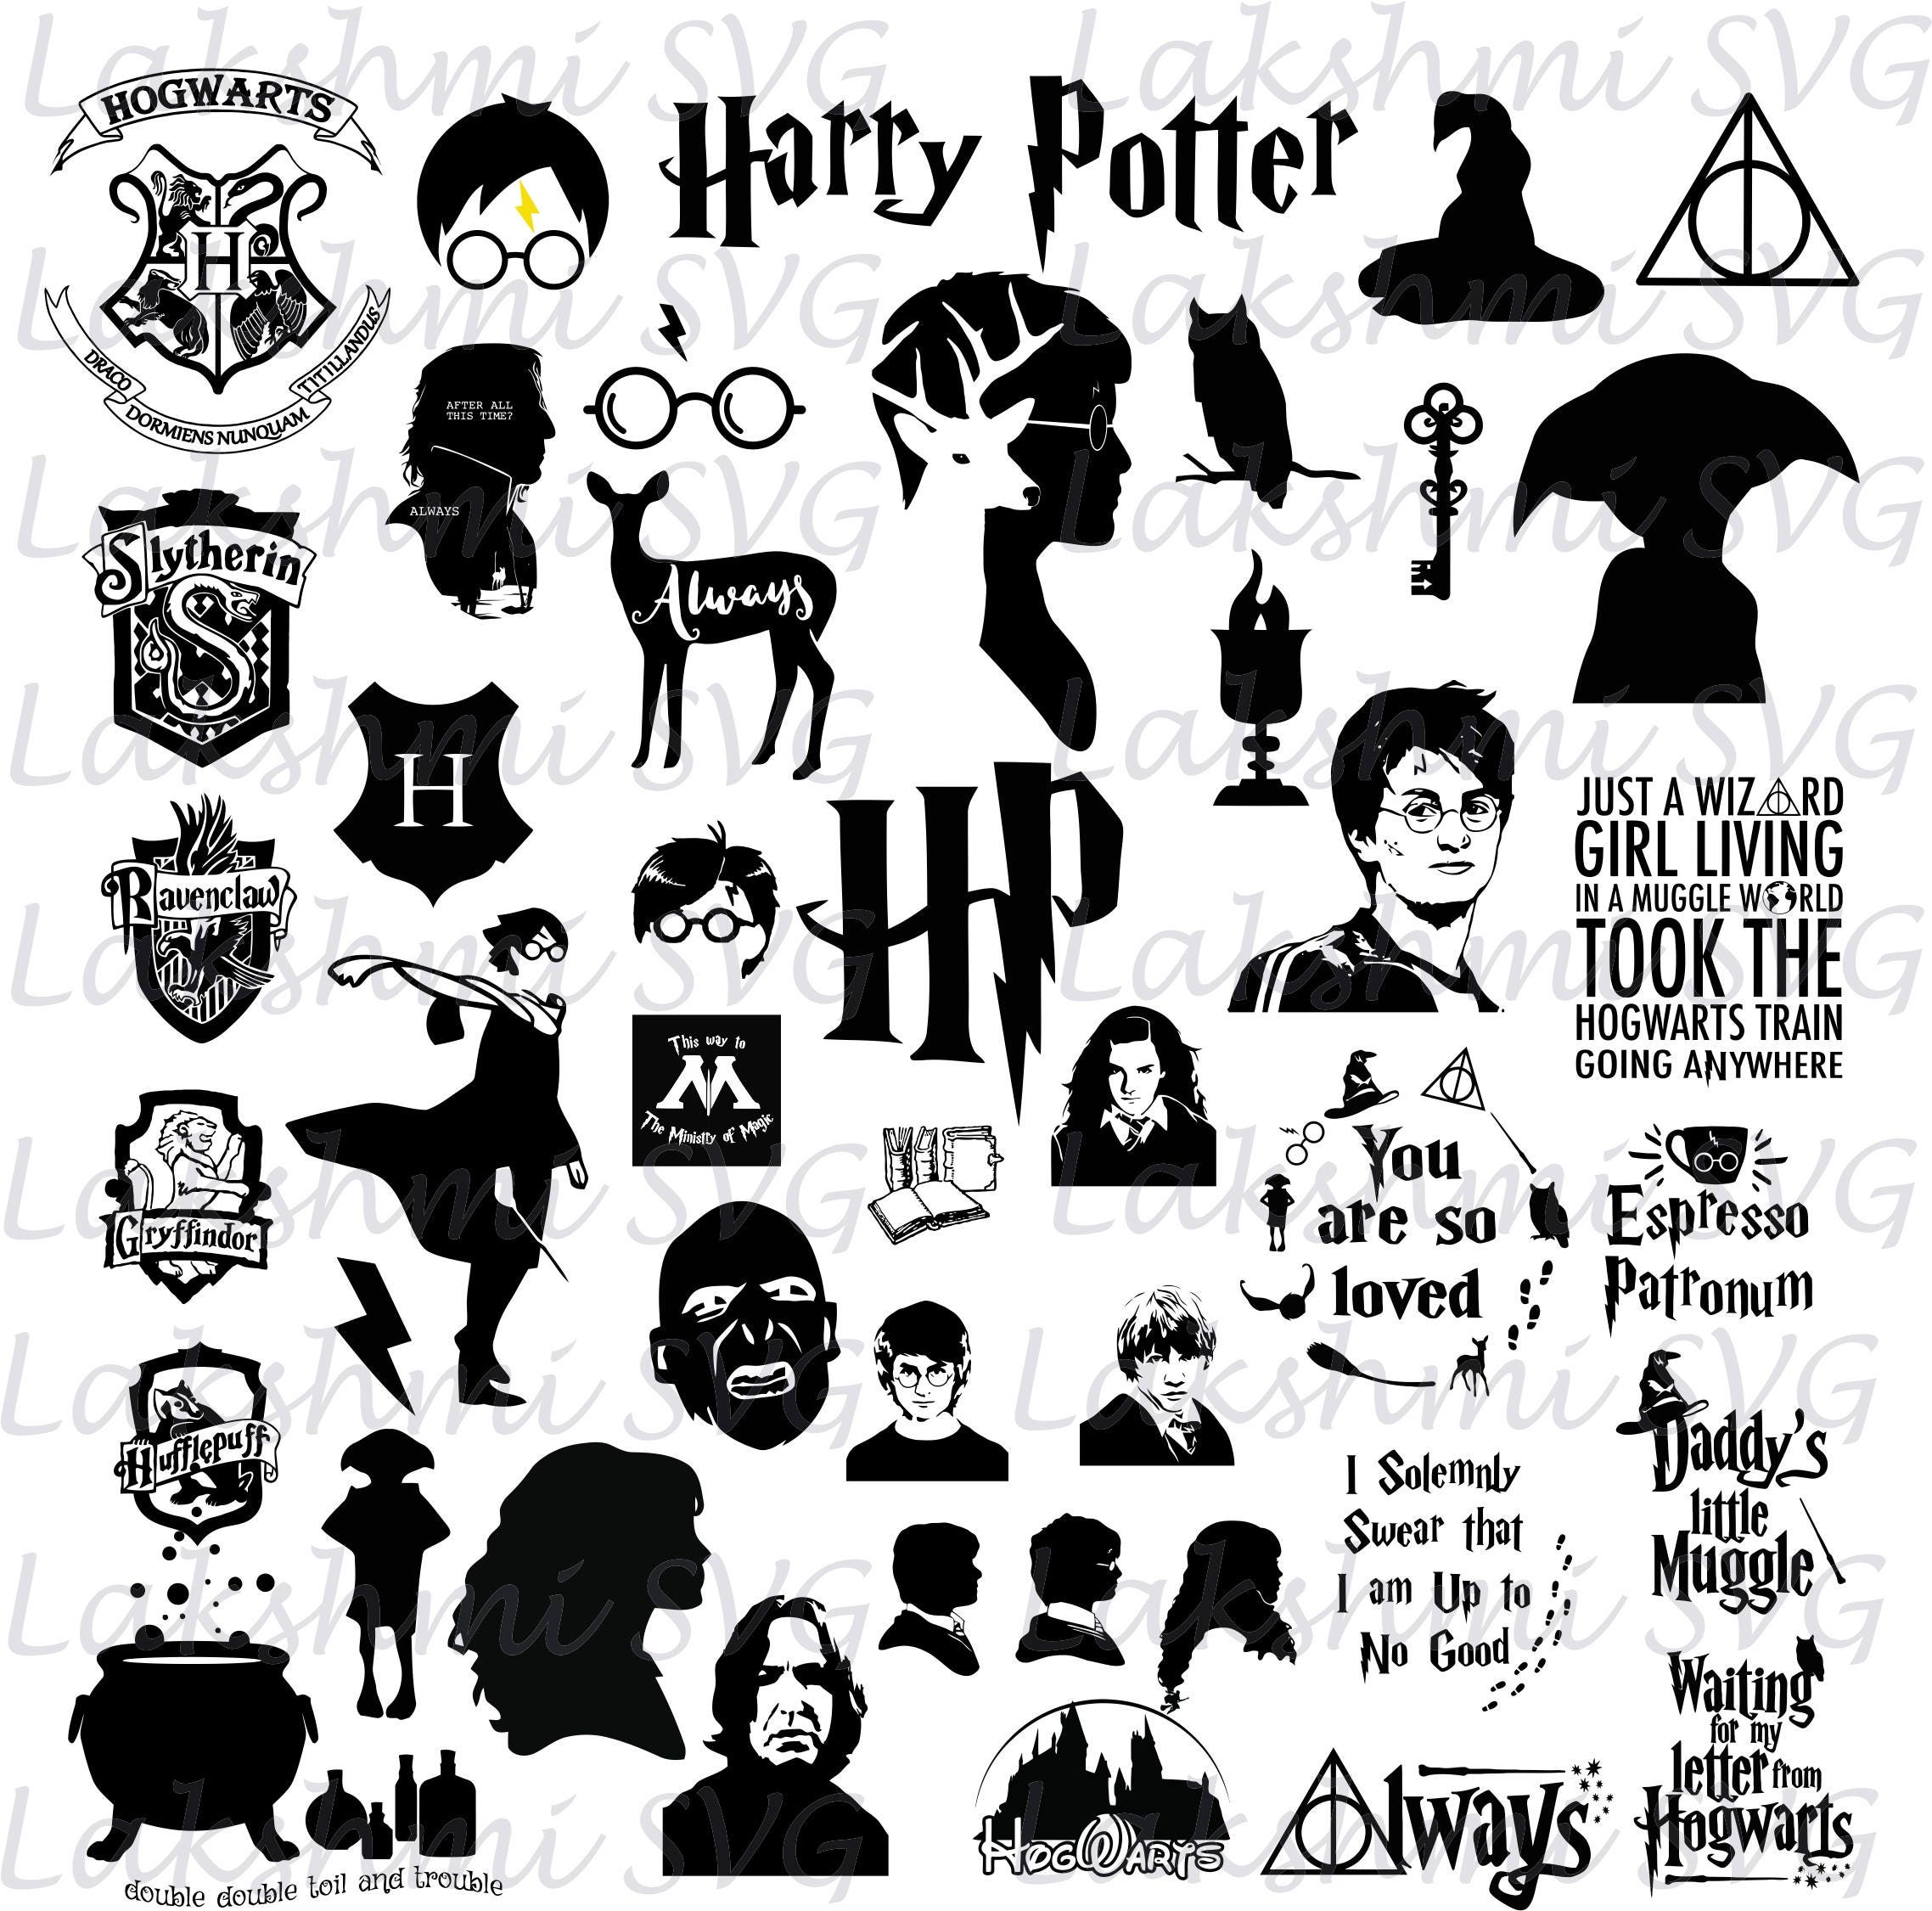 Download Harry Potter svg files50 Harry Potter svg you are so loved